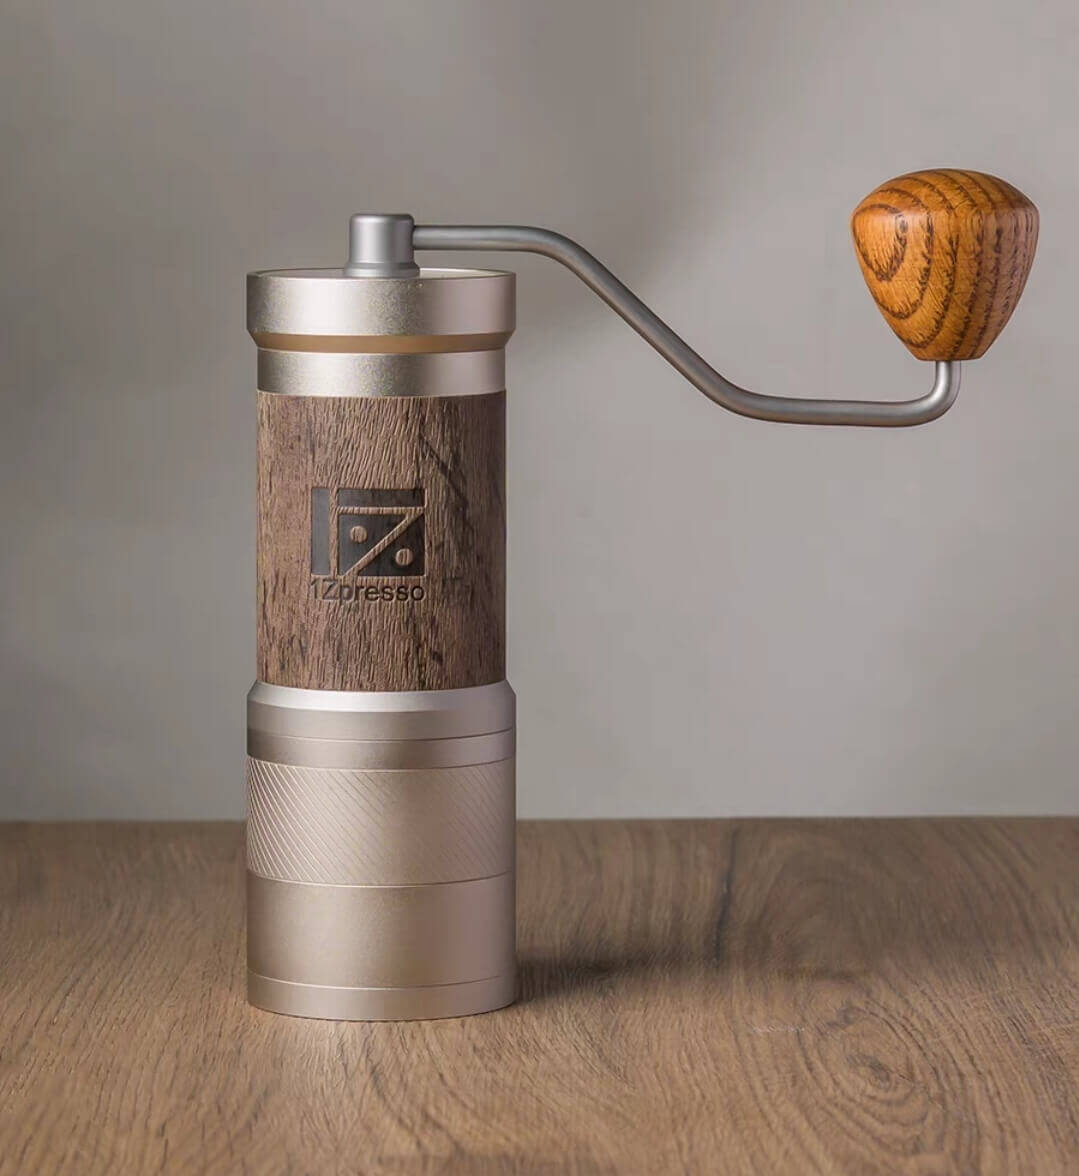 1Zpresso JEPLUS 手搖磨豆機 Je Plus 不鏽鋼意式大刀盤 Coffee Grinder Manual JE-Plus - Quality Life Coffee